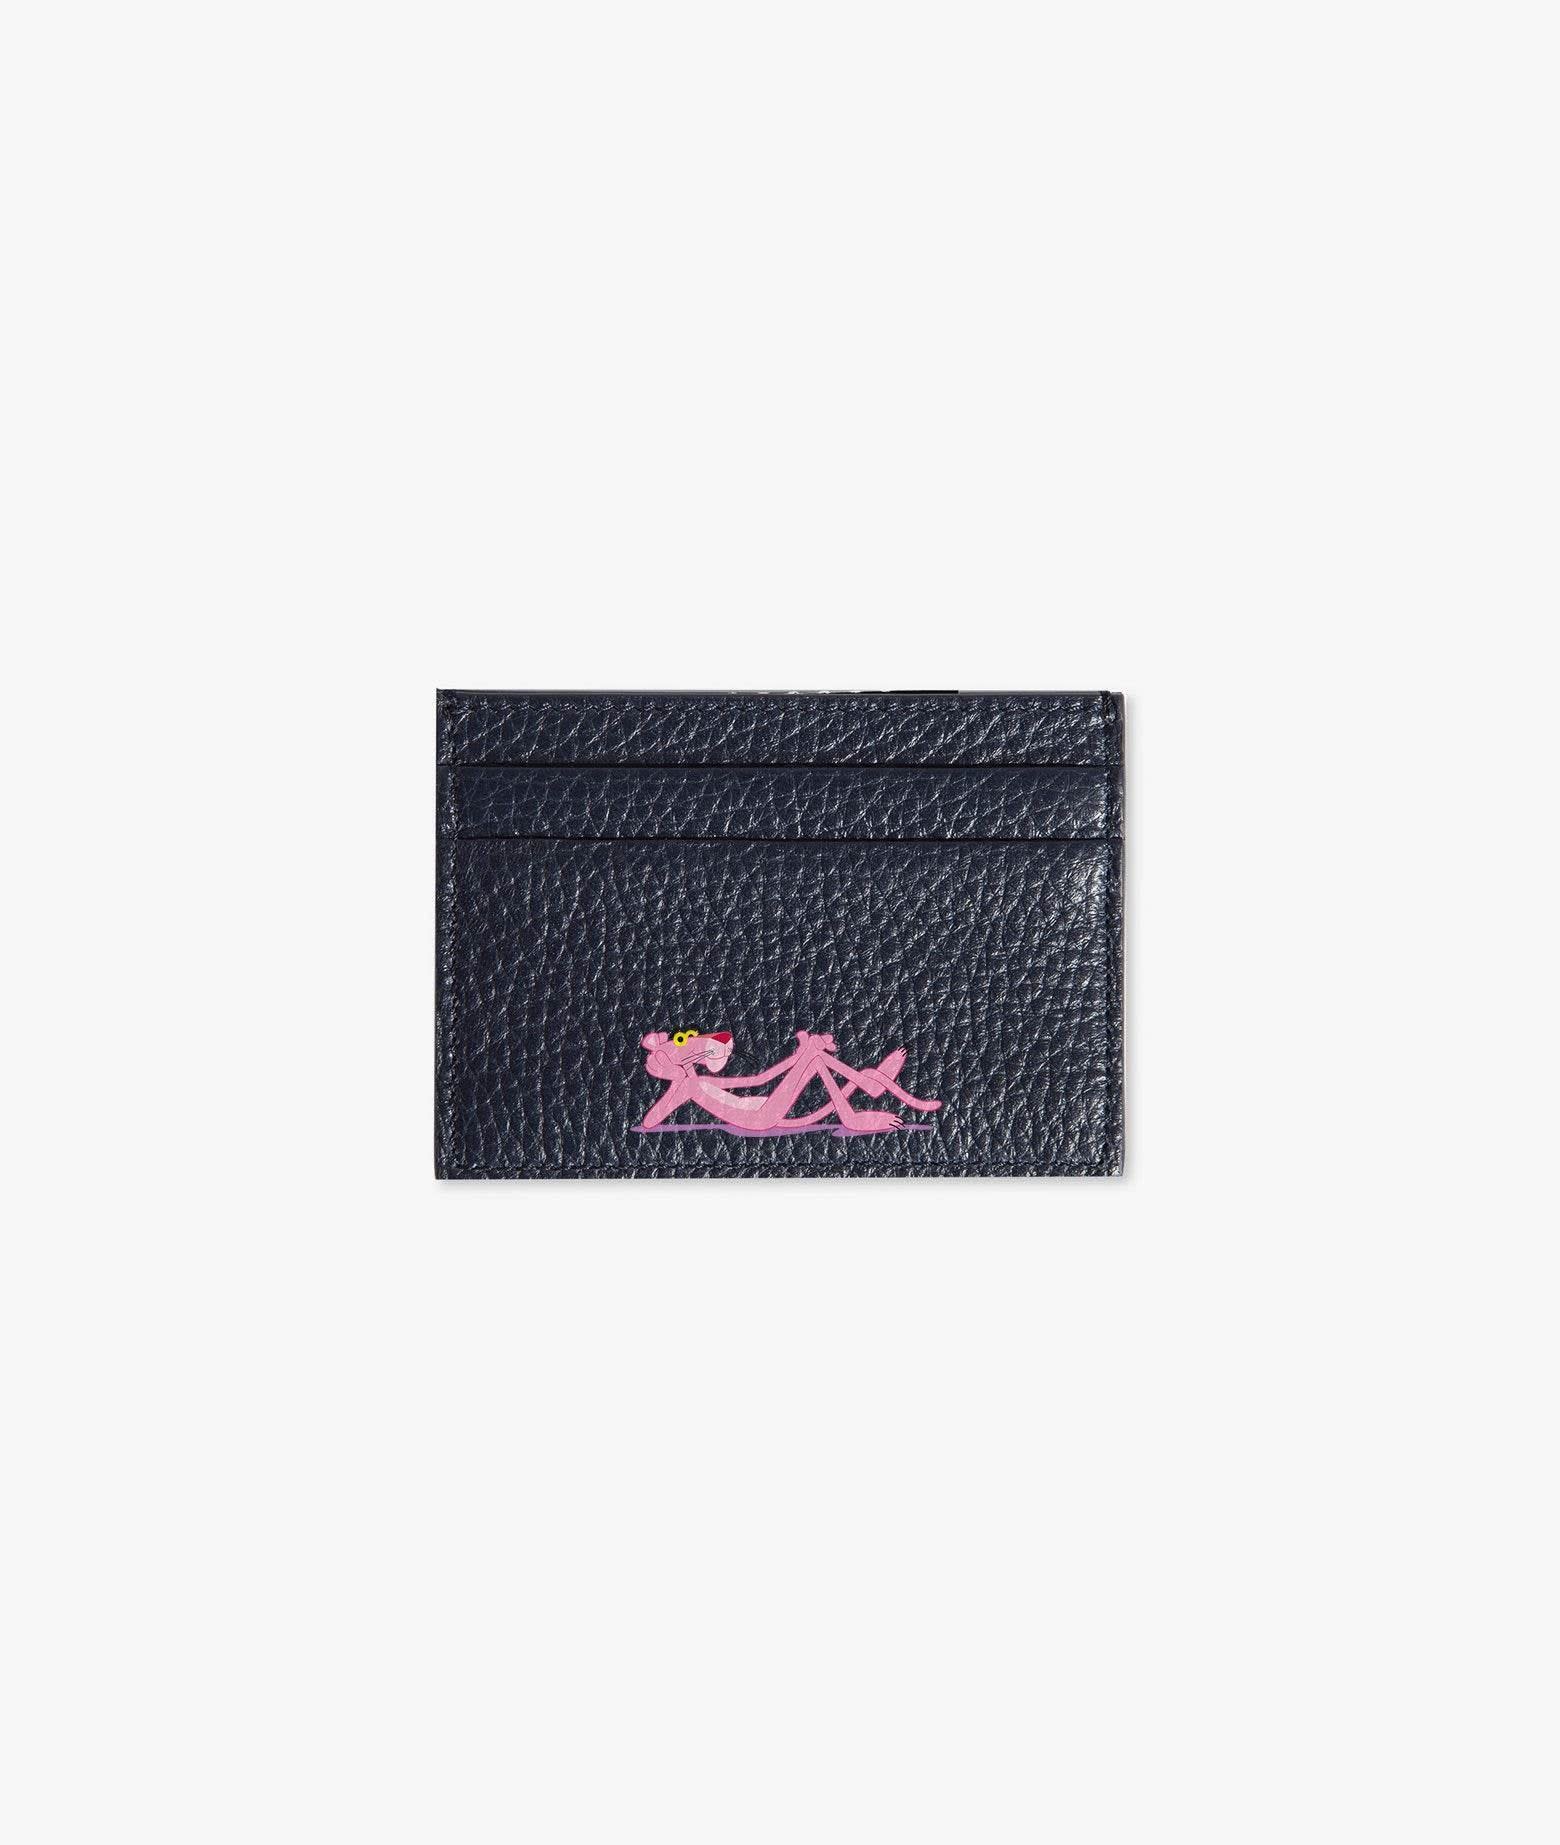 Card Holder pink Panther Wallet